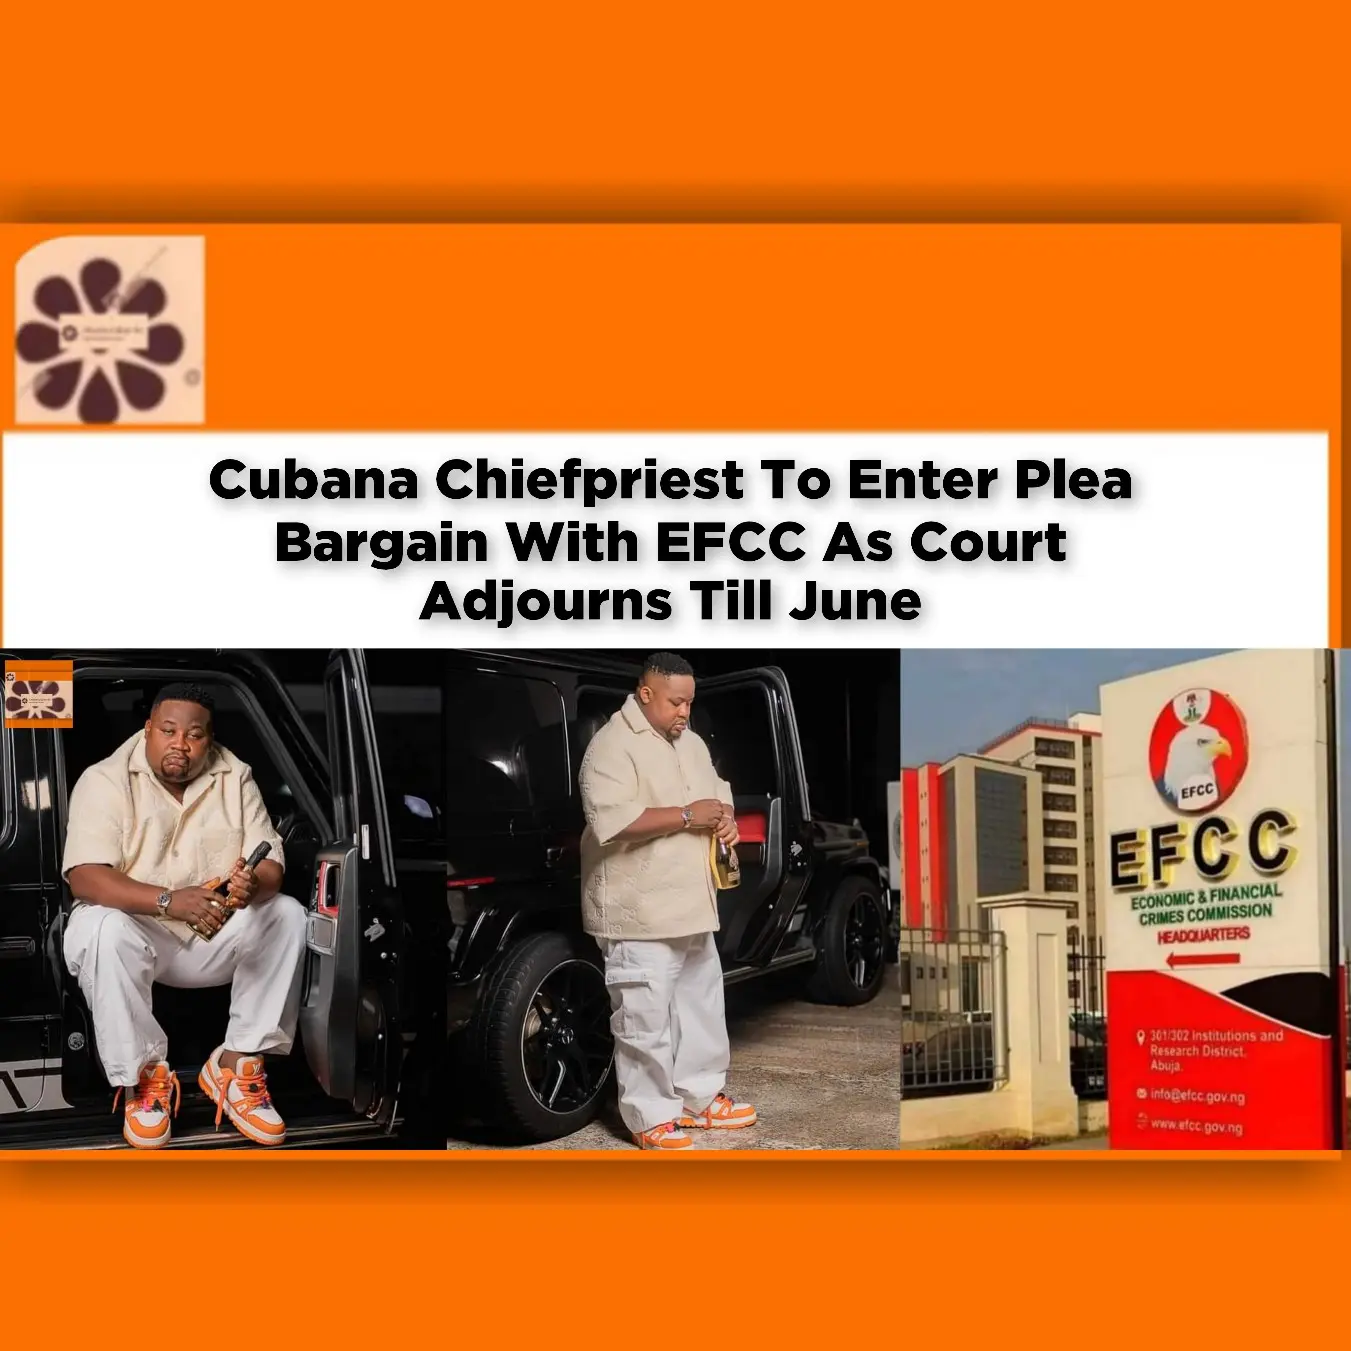 Cubana Chiefpriest To Enter Plea Bargain With EFCC As Court Adjourns Till June ~ OsazuwaAkonedo #Dakar